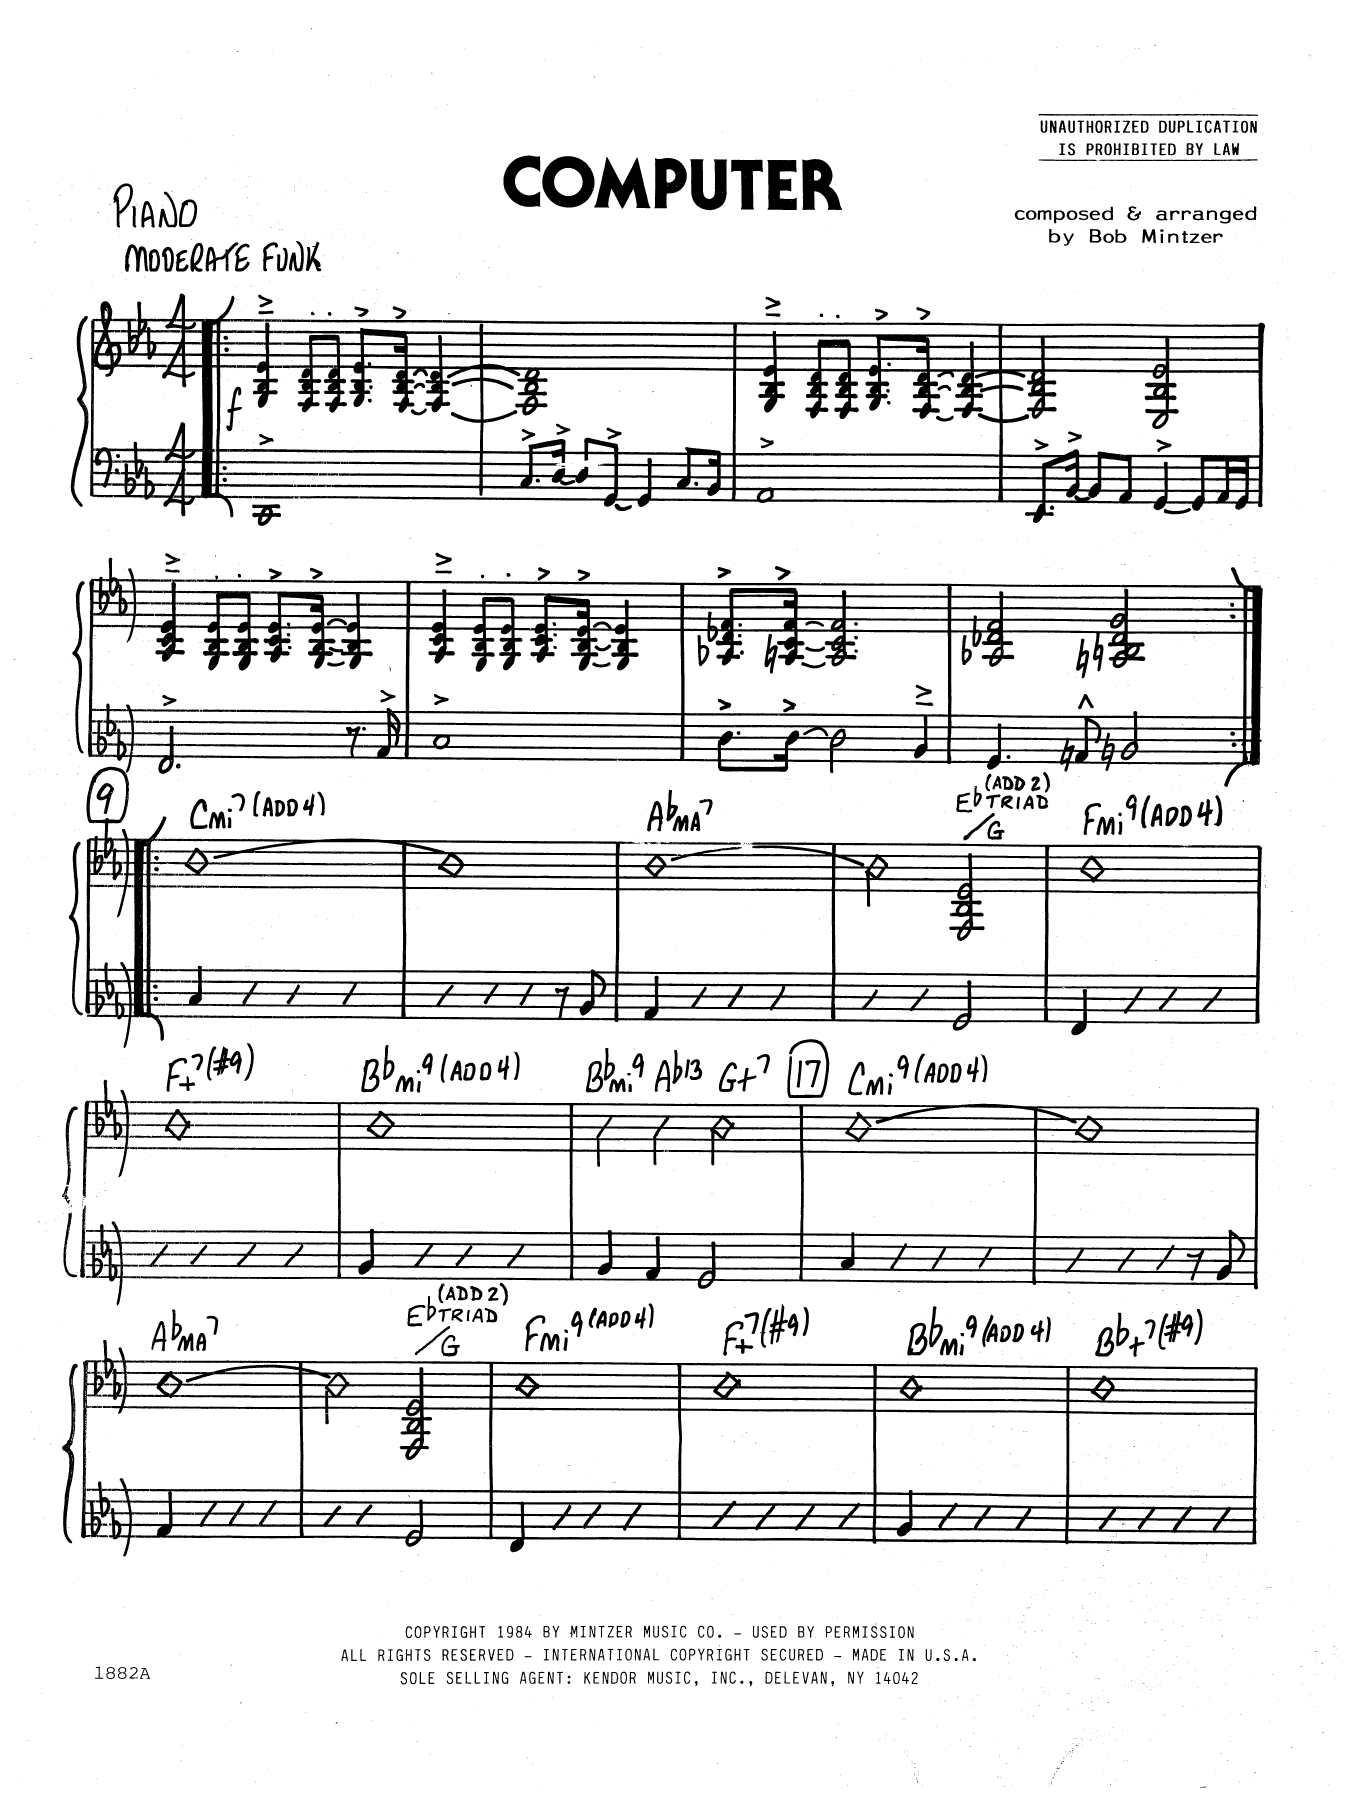 Download Bob Mintzer Computer - Piano Sheet Music